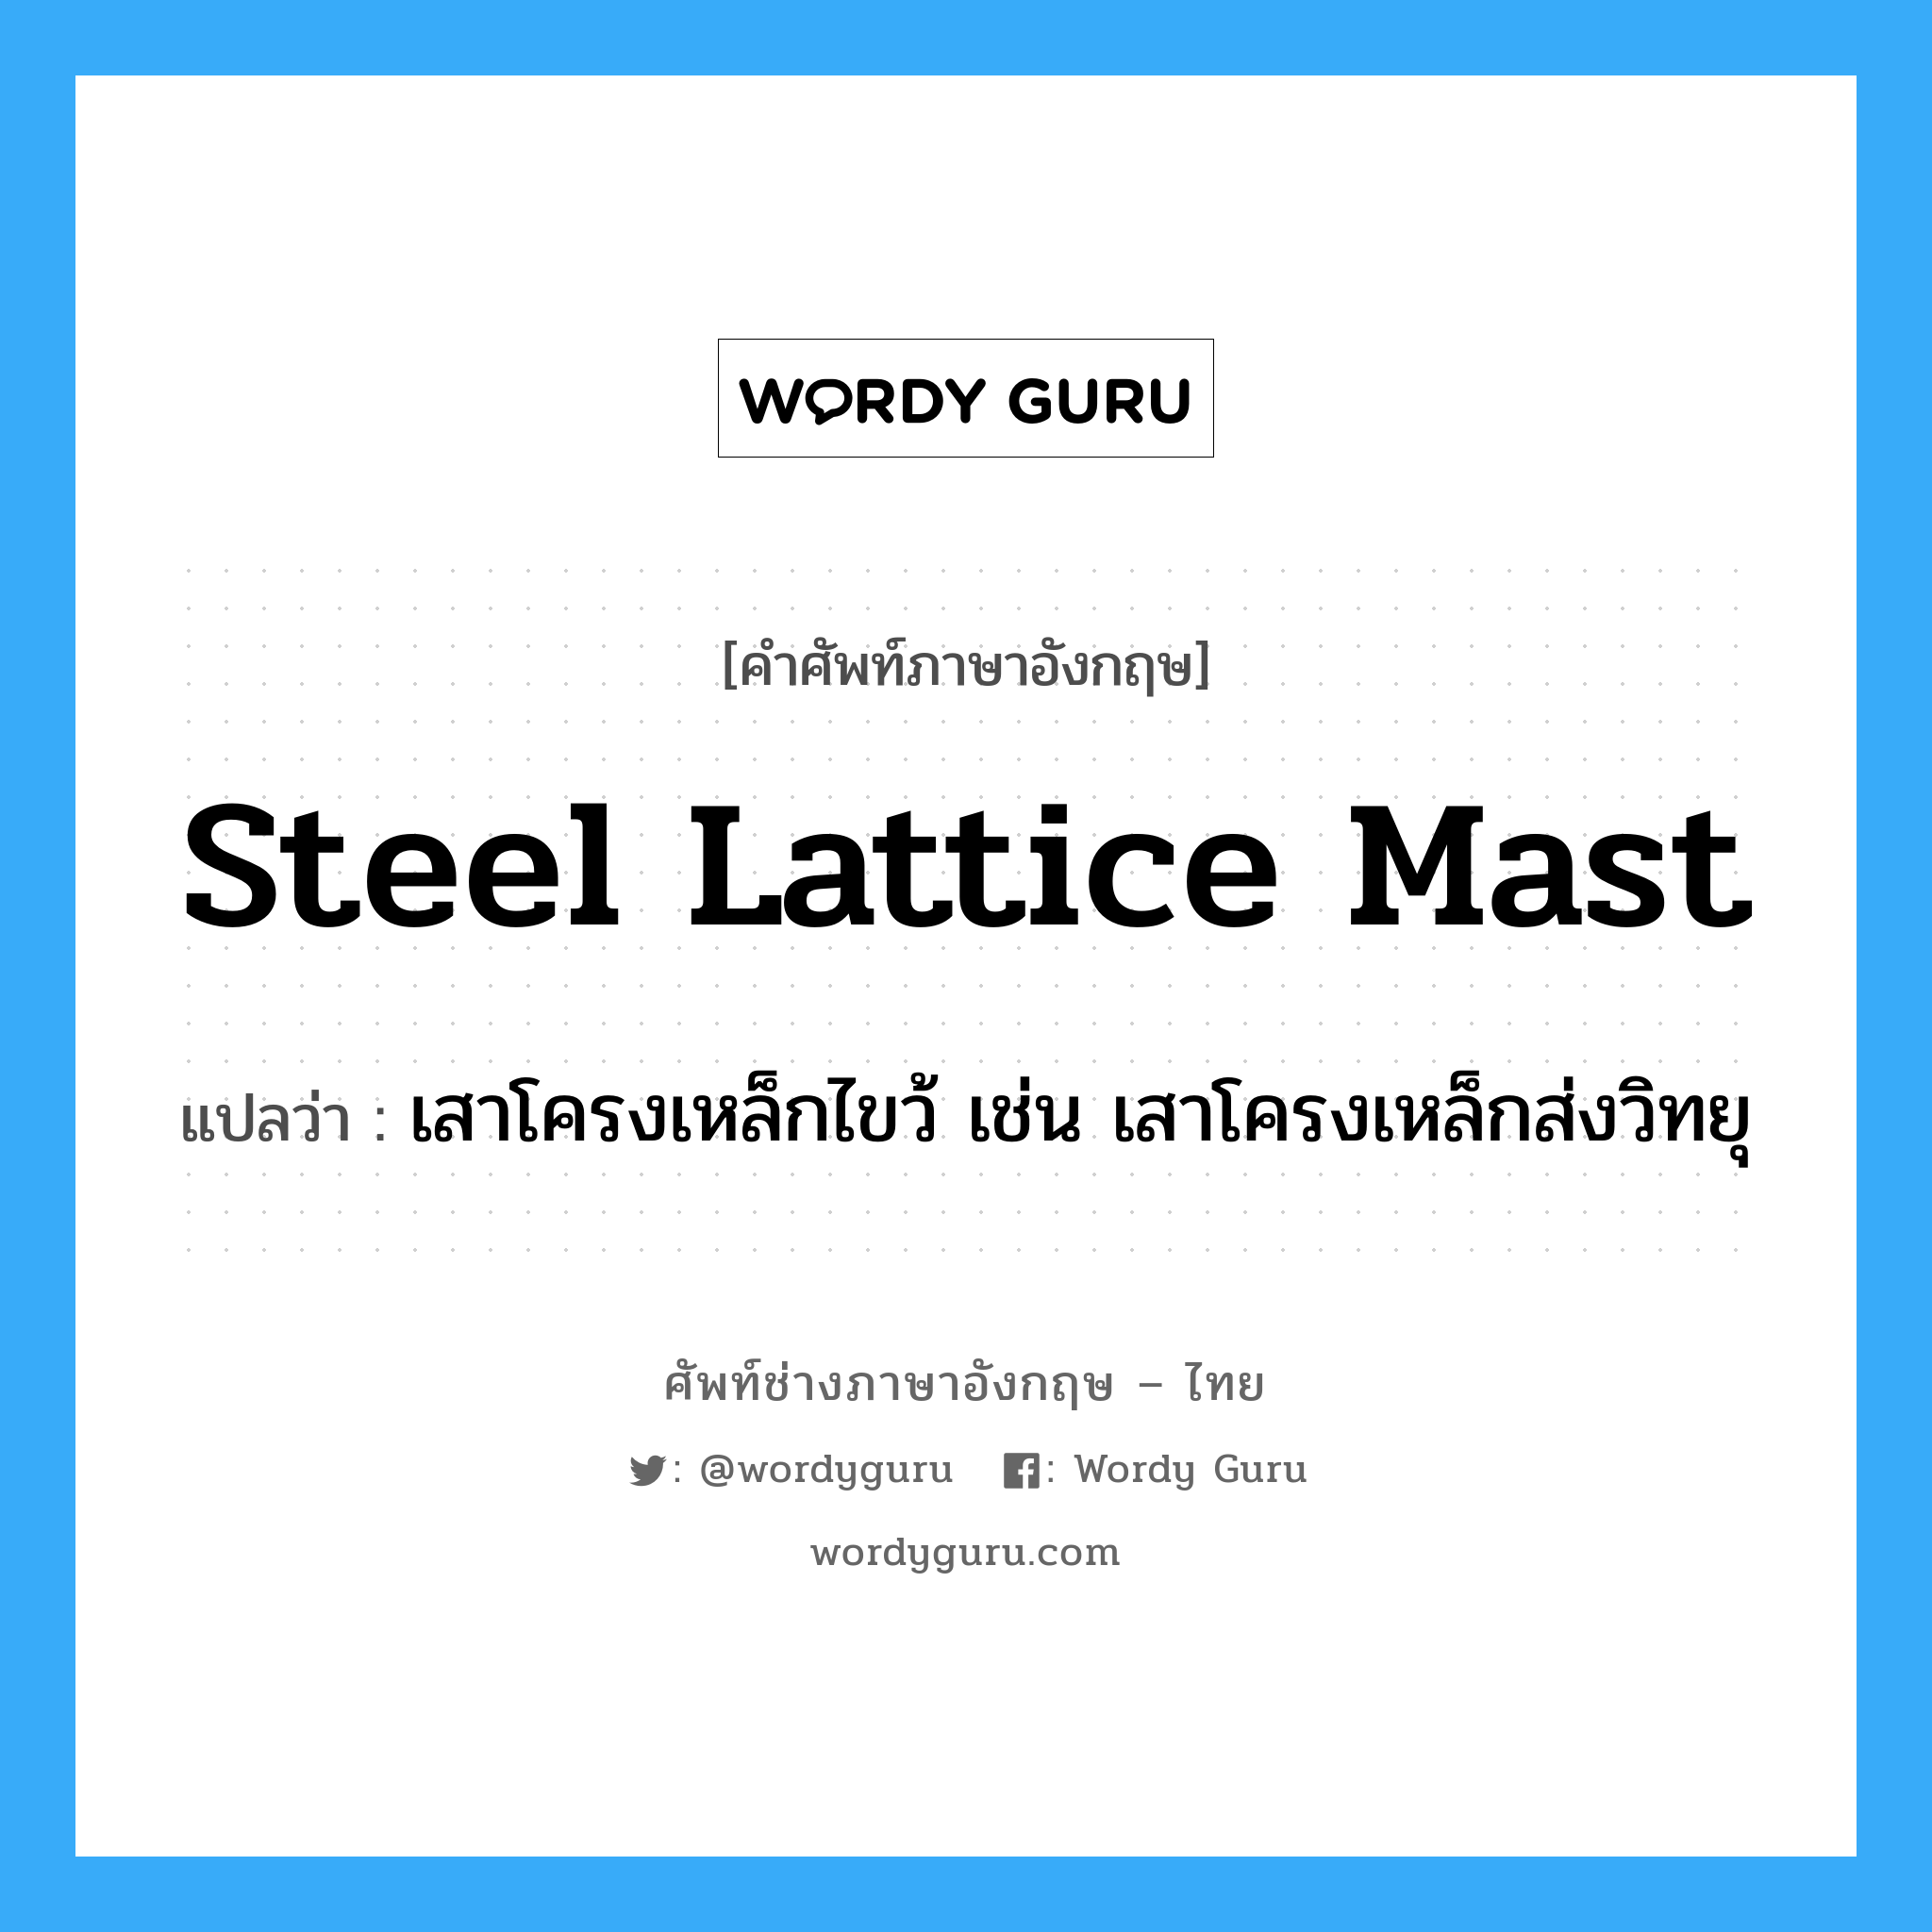 steel lattice mast แปลว่า?, คำศัพท์ช่างภาษาอังกฤษ - ไทย steel lattice mast คำศัพท์ภาษาอังกฤษ steel lattice mast แปลว่า เสาโครงเหล็กไขว้ เช่น เสาโครงเหล็กส่งวิทยุ